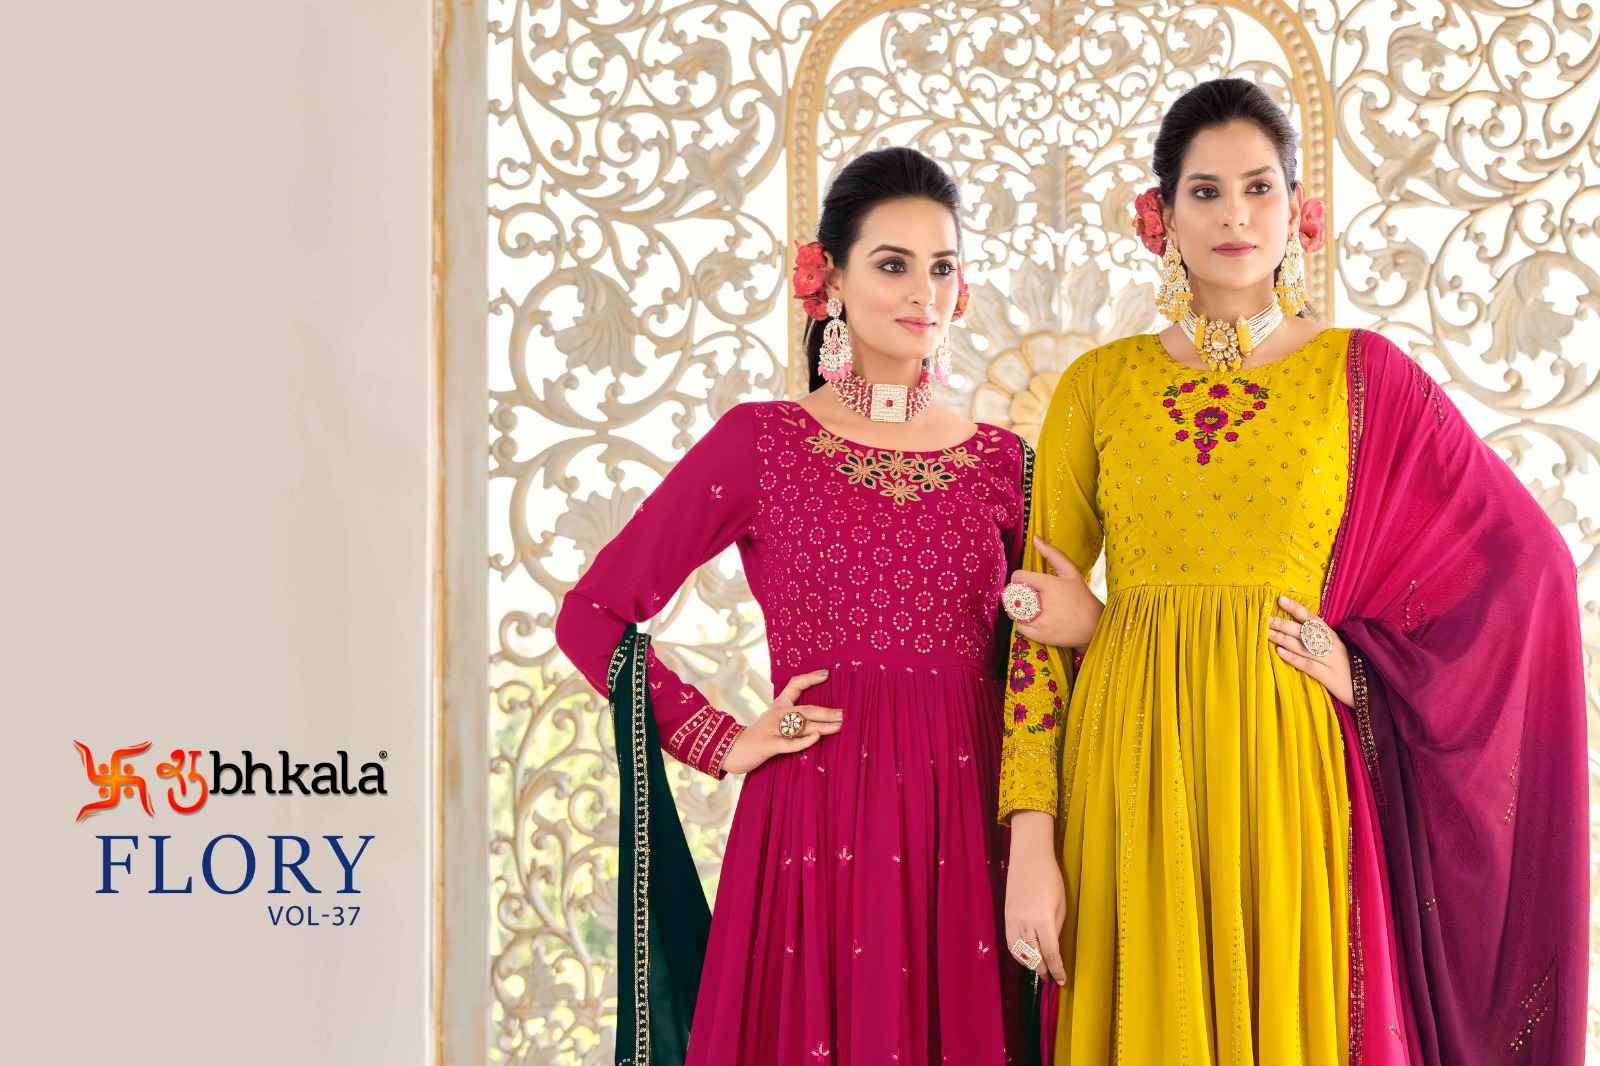 Shubhkala Flory Vol 37 Festive Collection Fancy Gharara Dress Suppliers